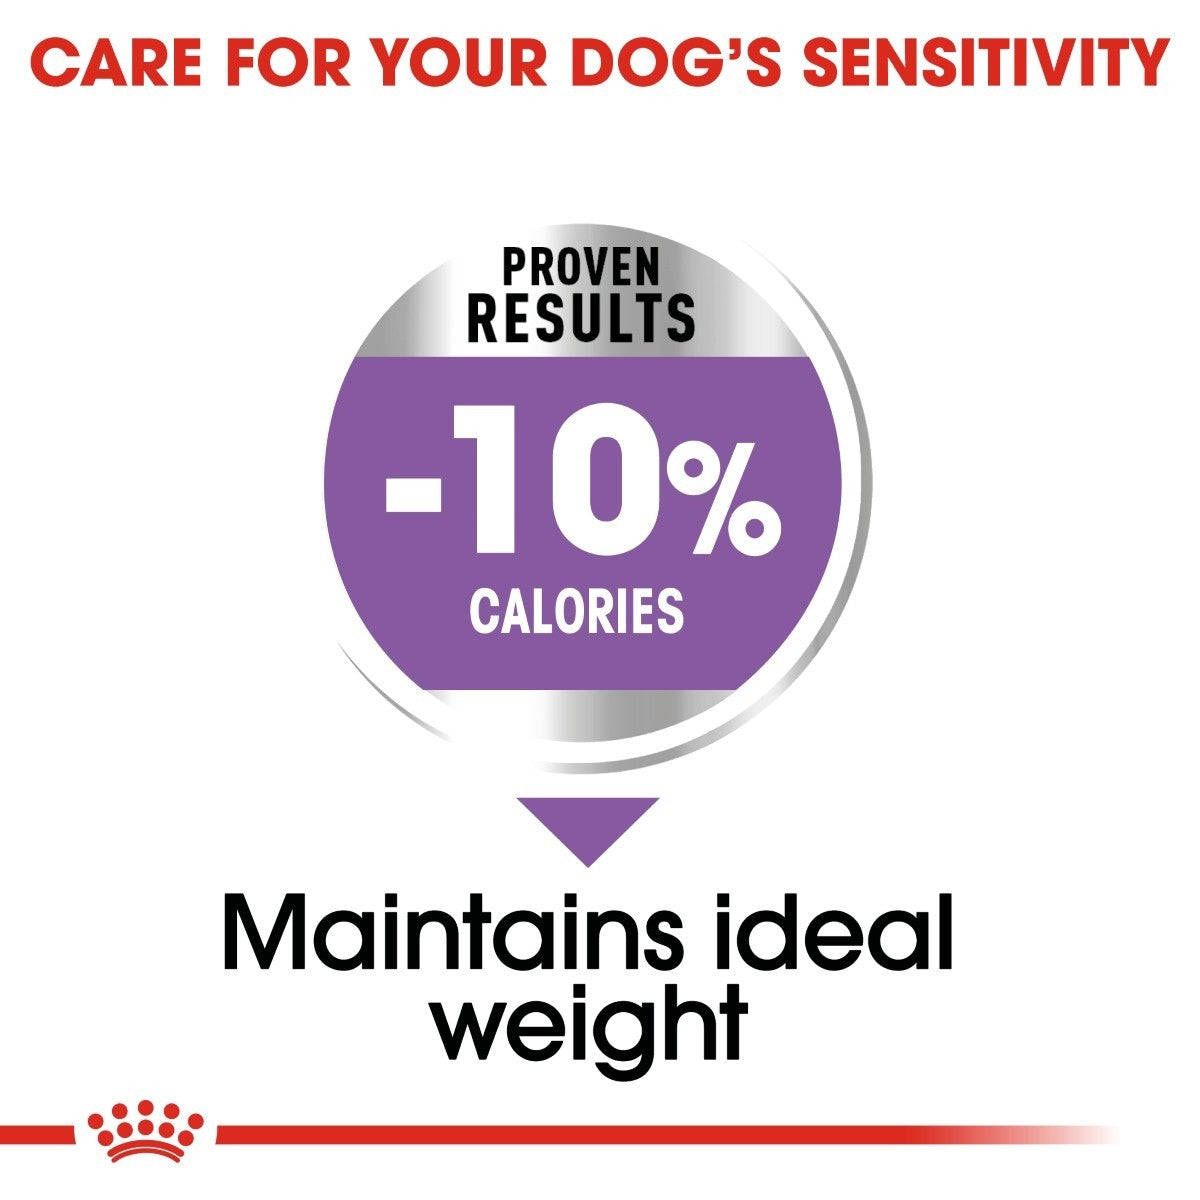 Royal Canin Medium Sterilised Care Dry Dog Food - Targa Pet Shop